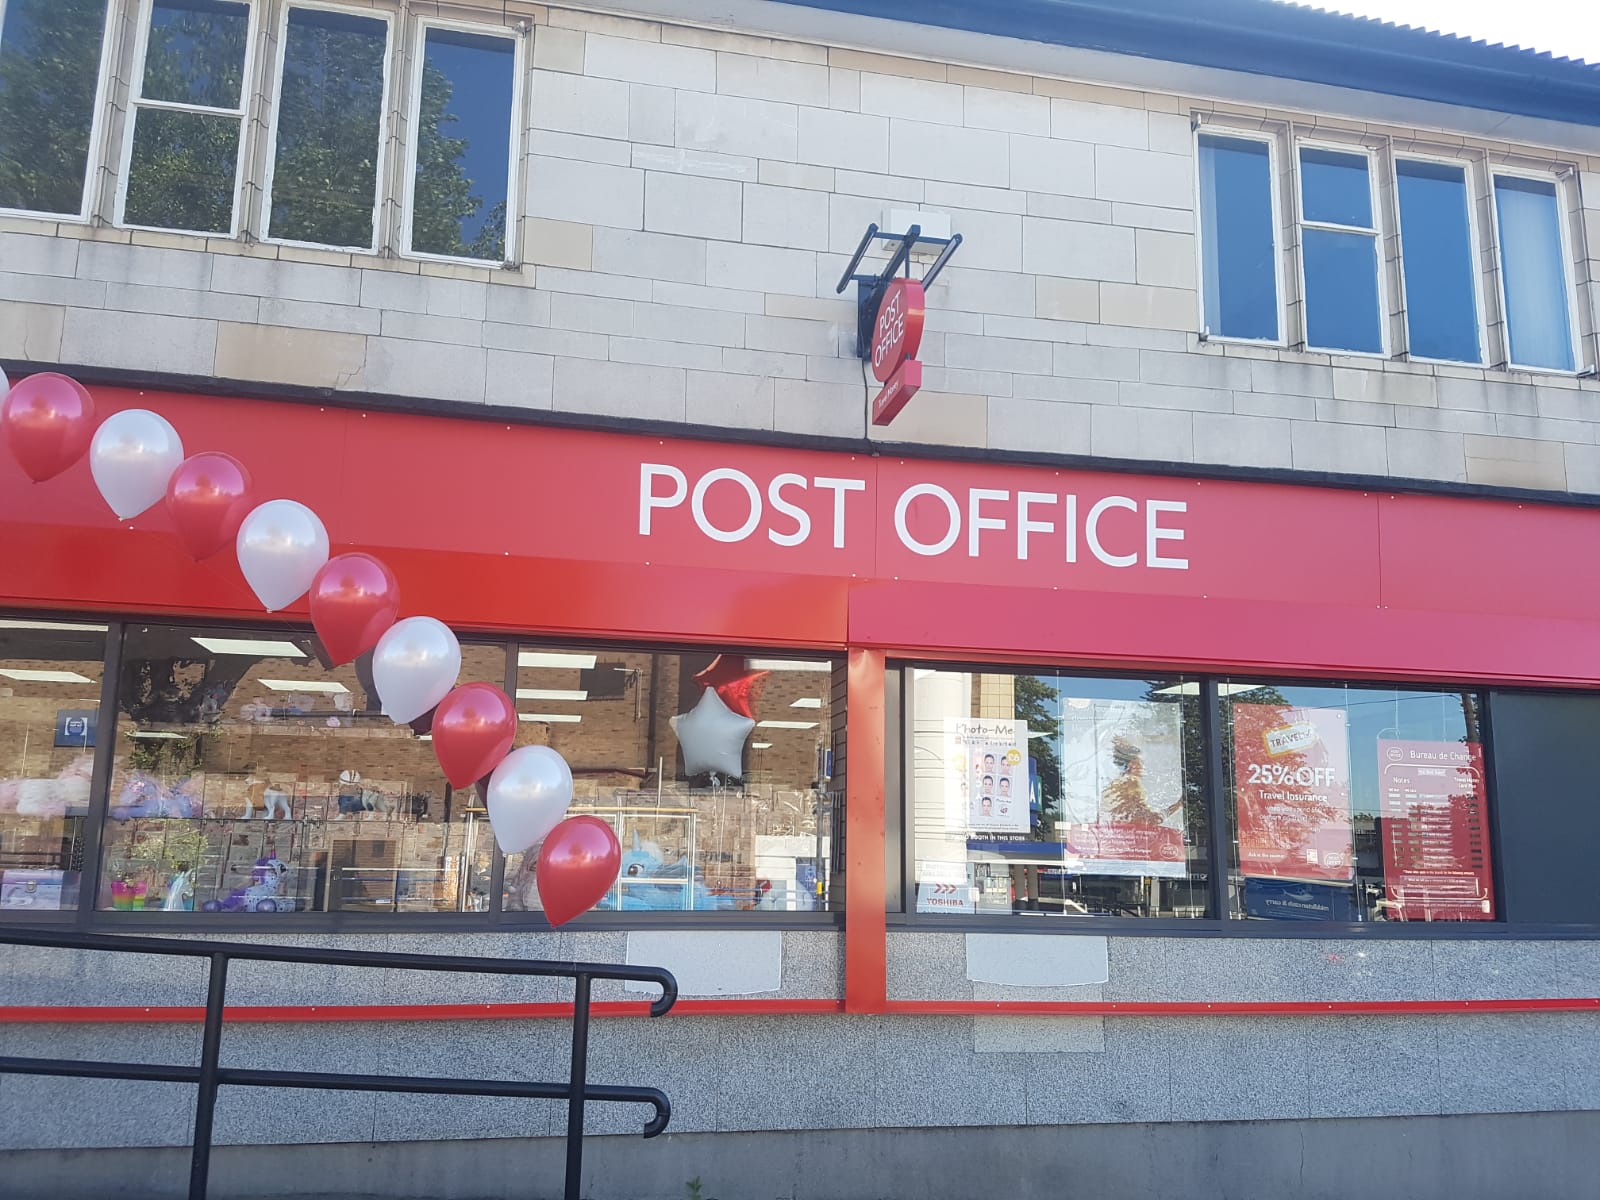 Kingstanding Post Office & Gift Shop